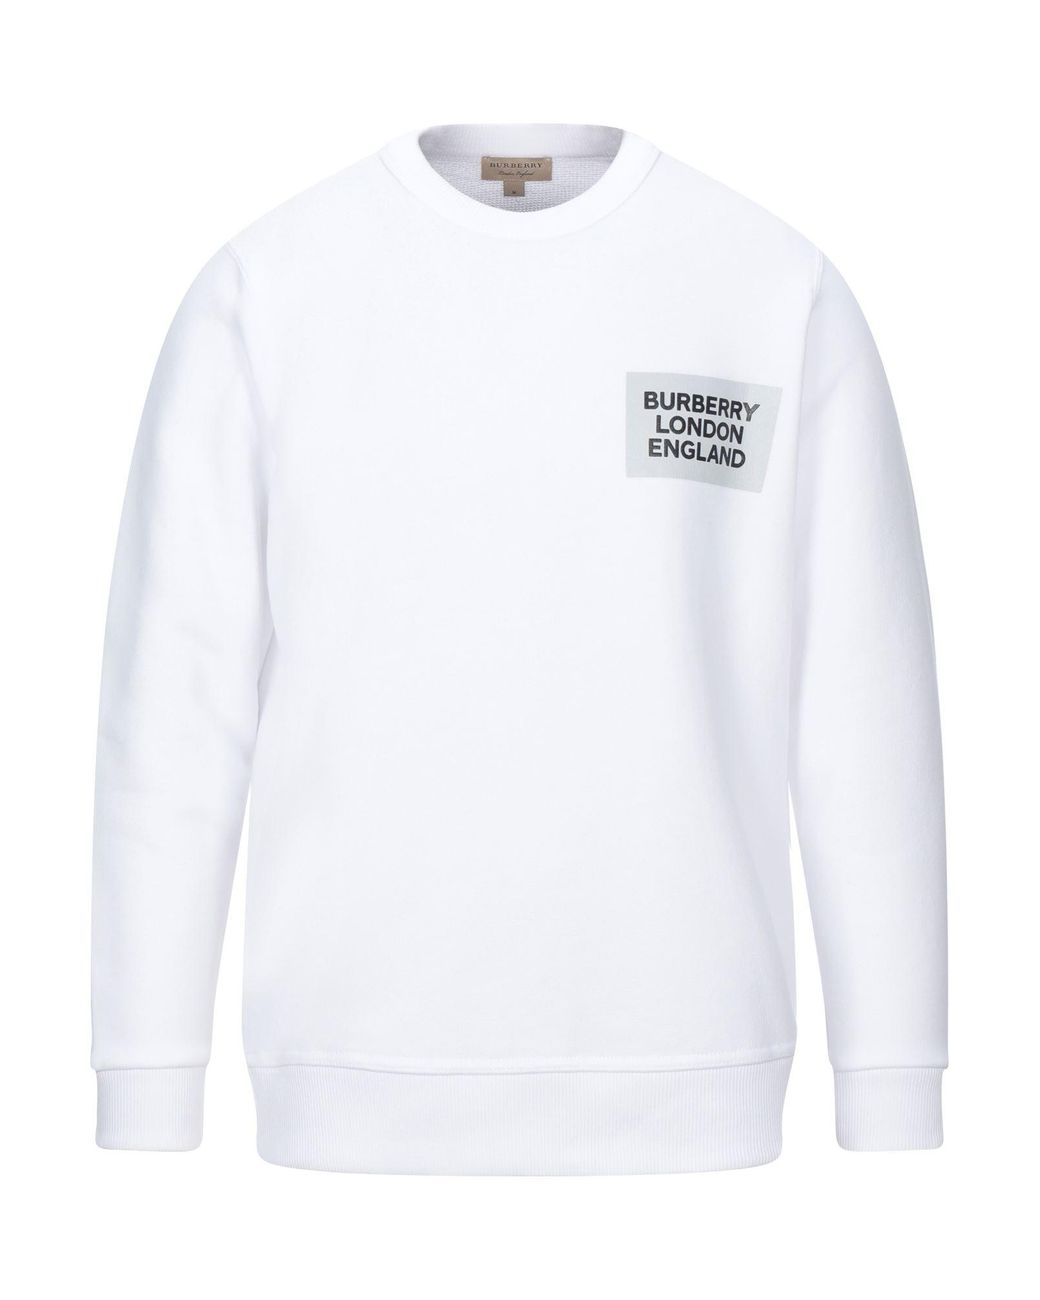 Burberry Sweatshirt in White for Men - Lyst